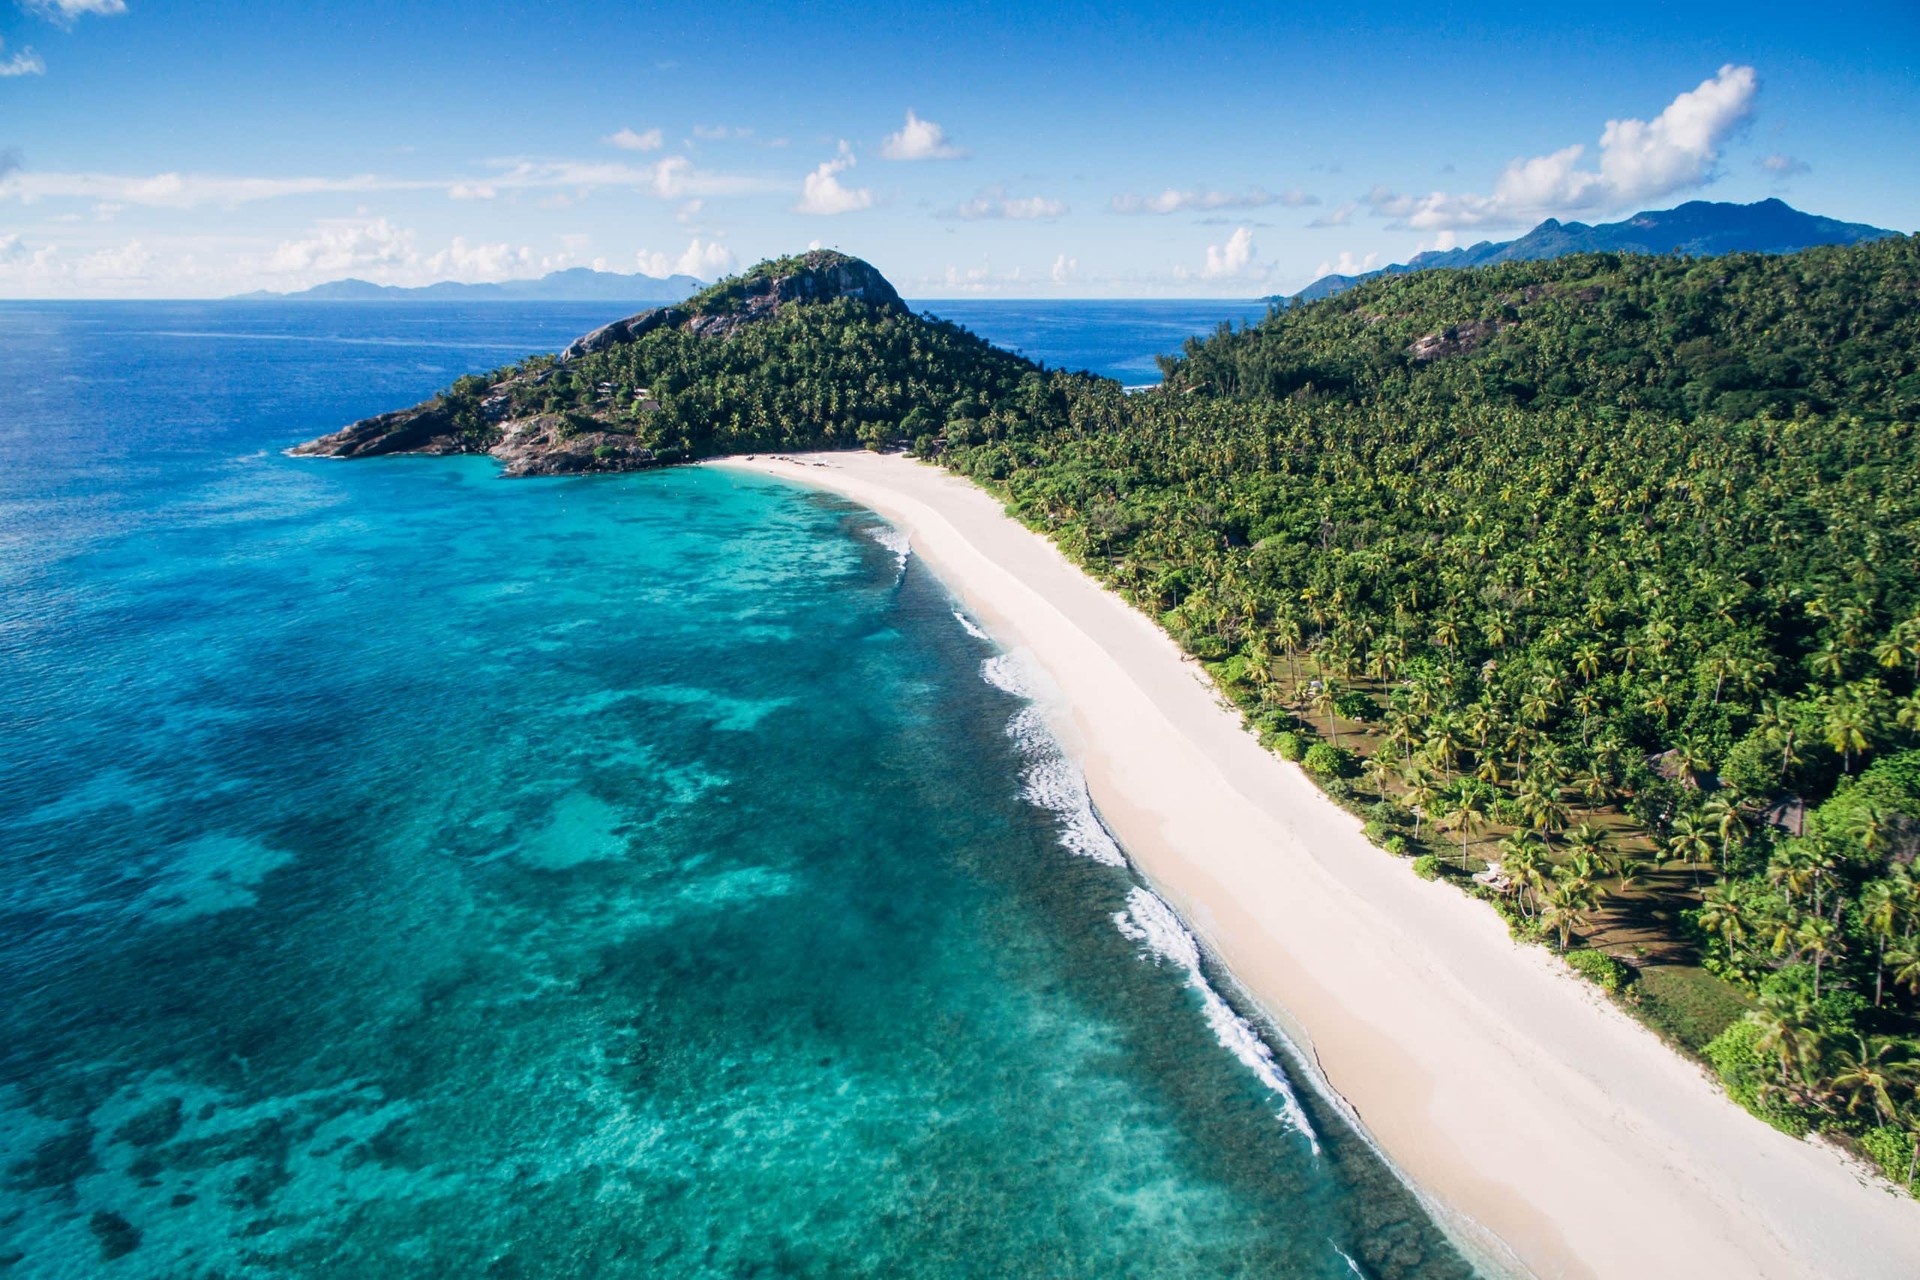 Seychelles North Island